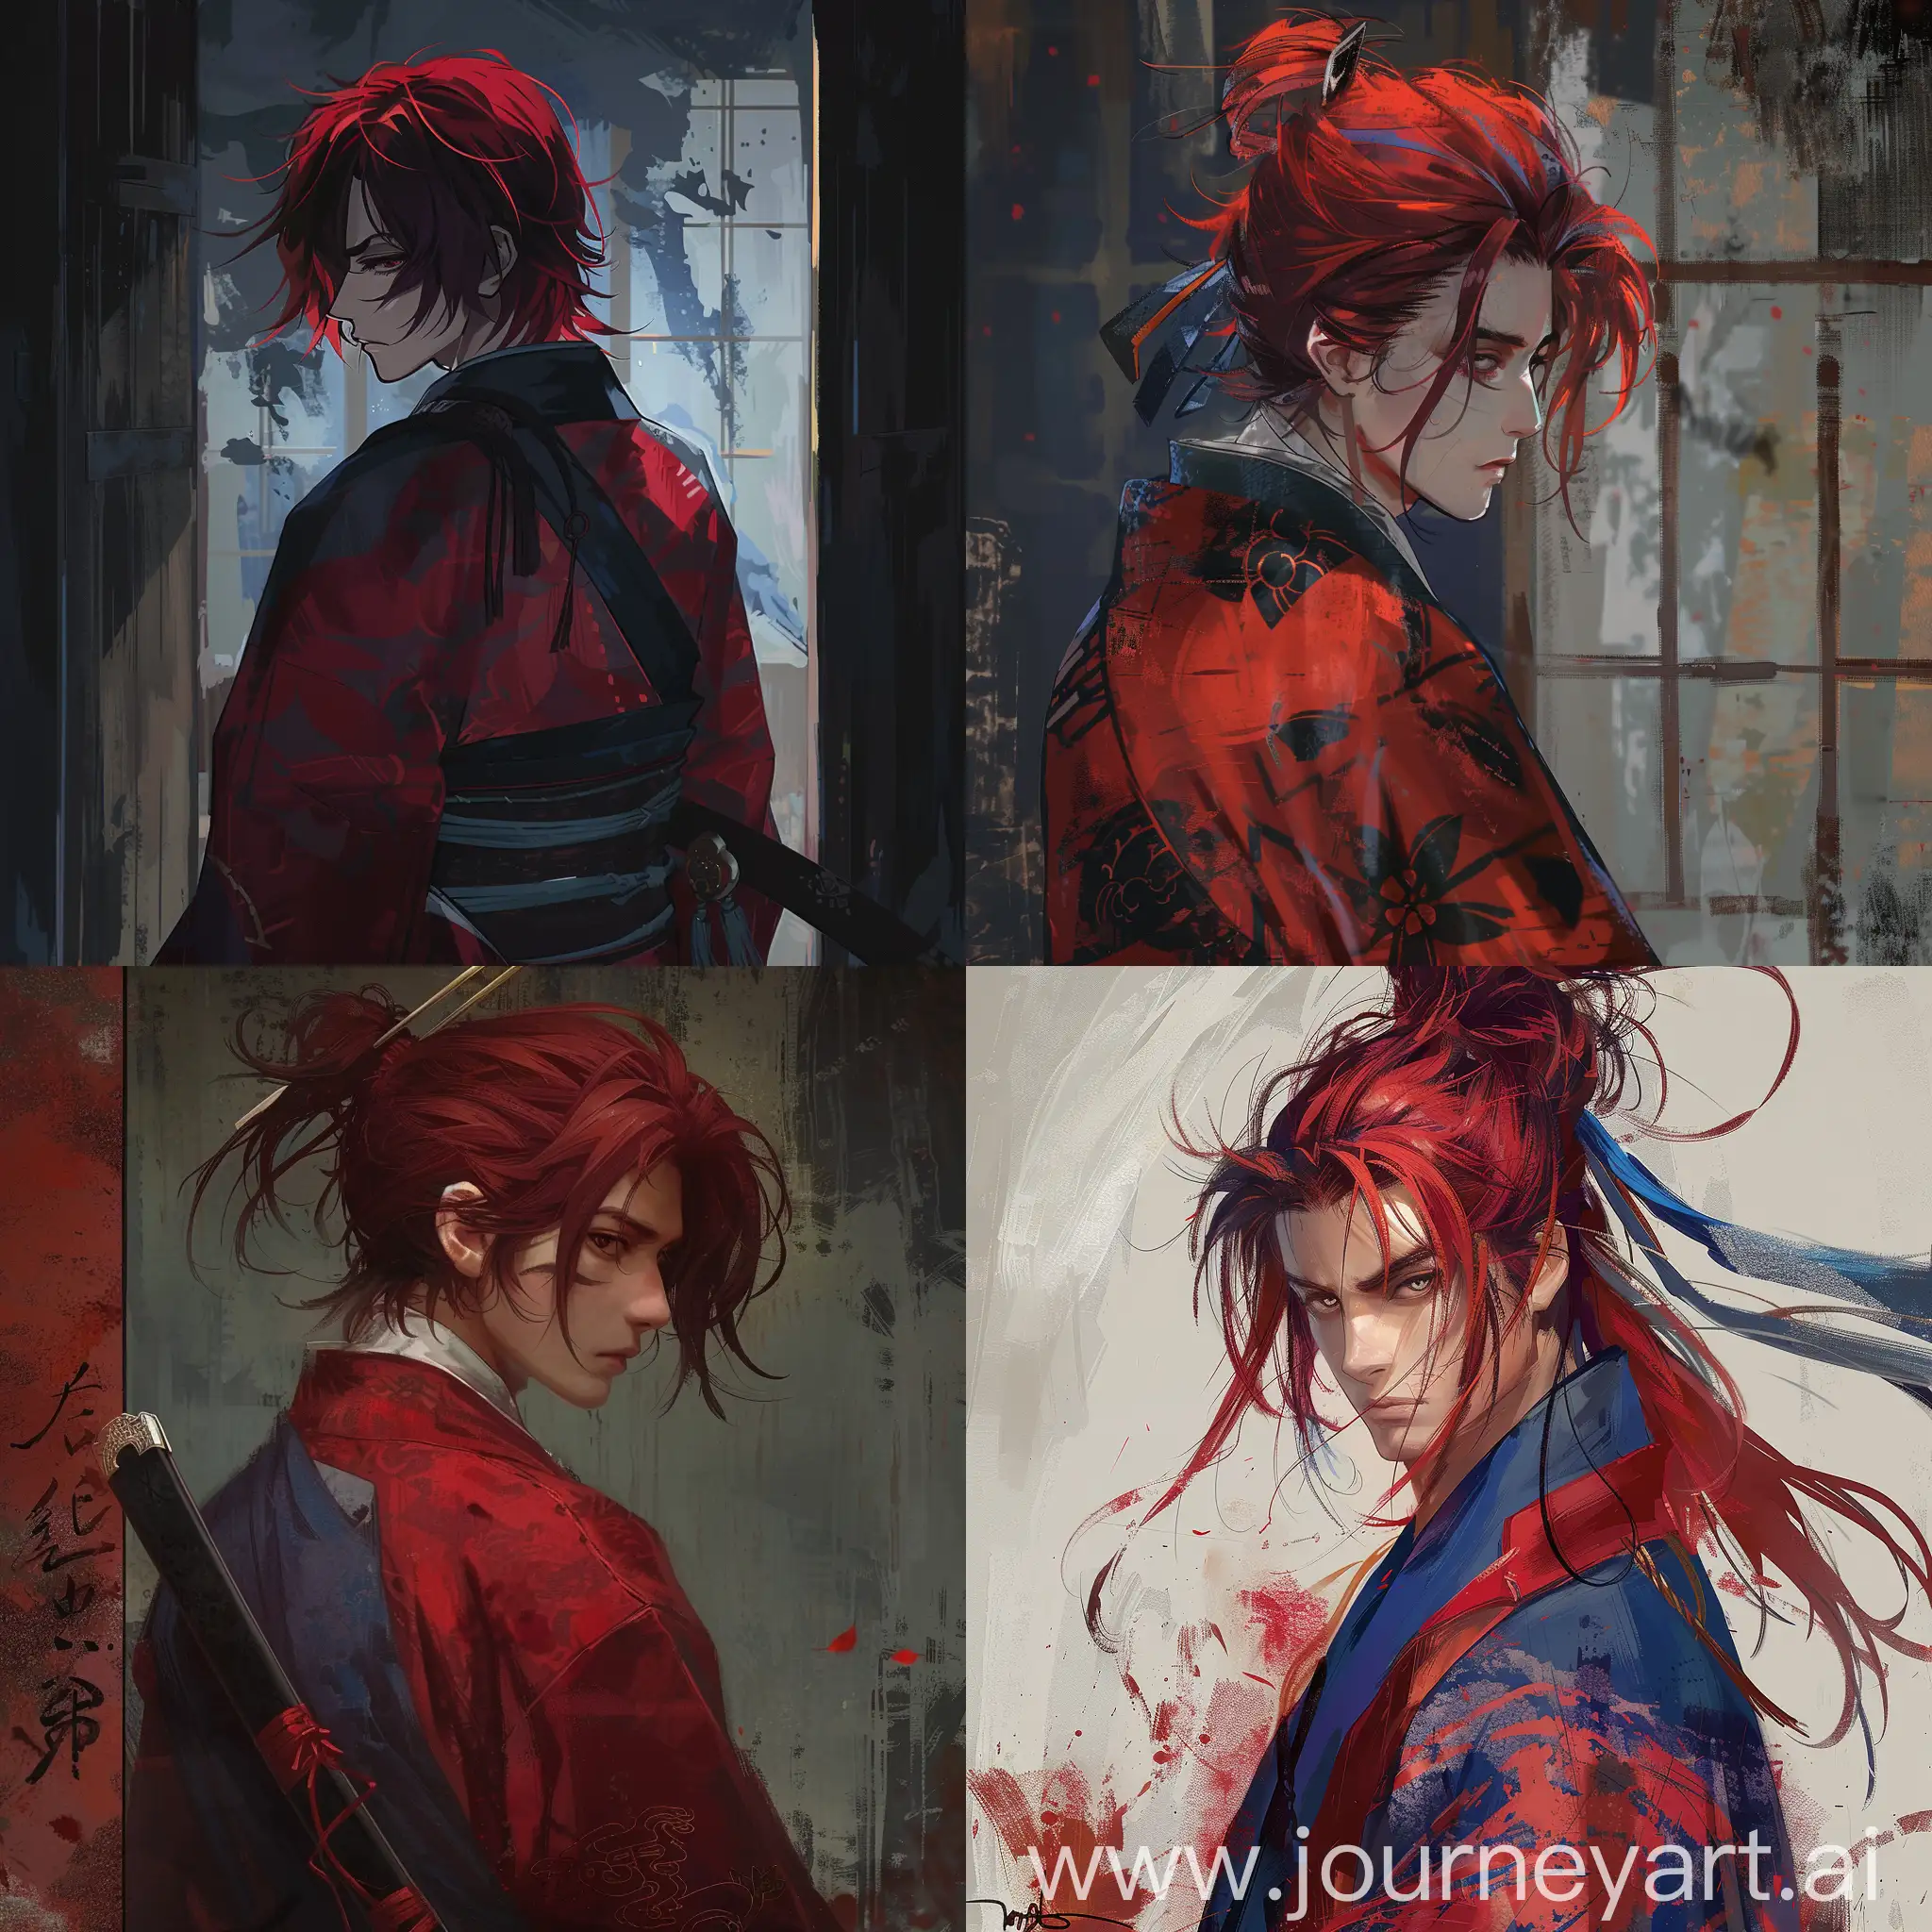 Samurai-with-Dark-Red-Hair-in-Anime-Art-Style